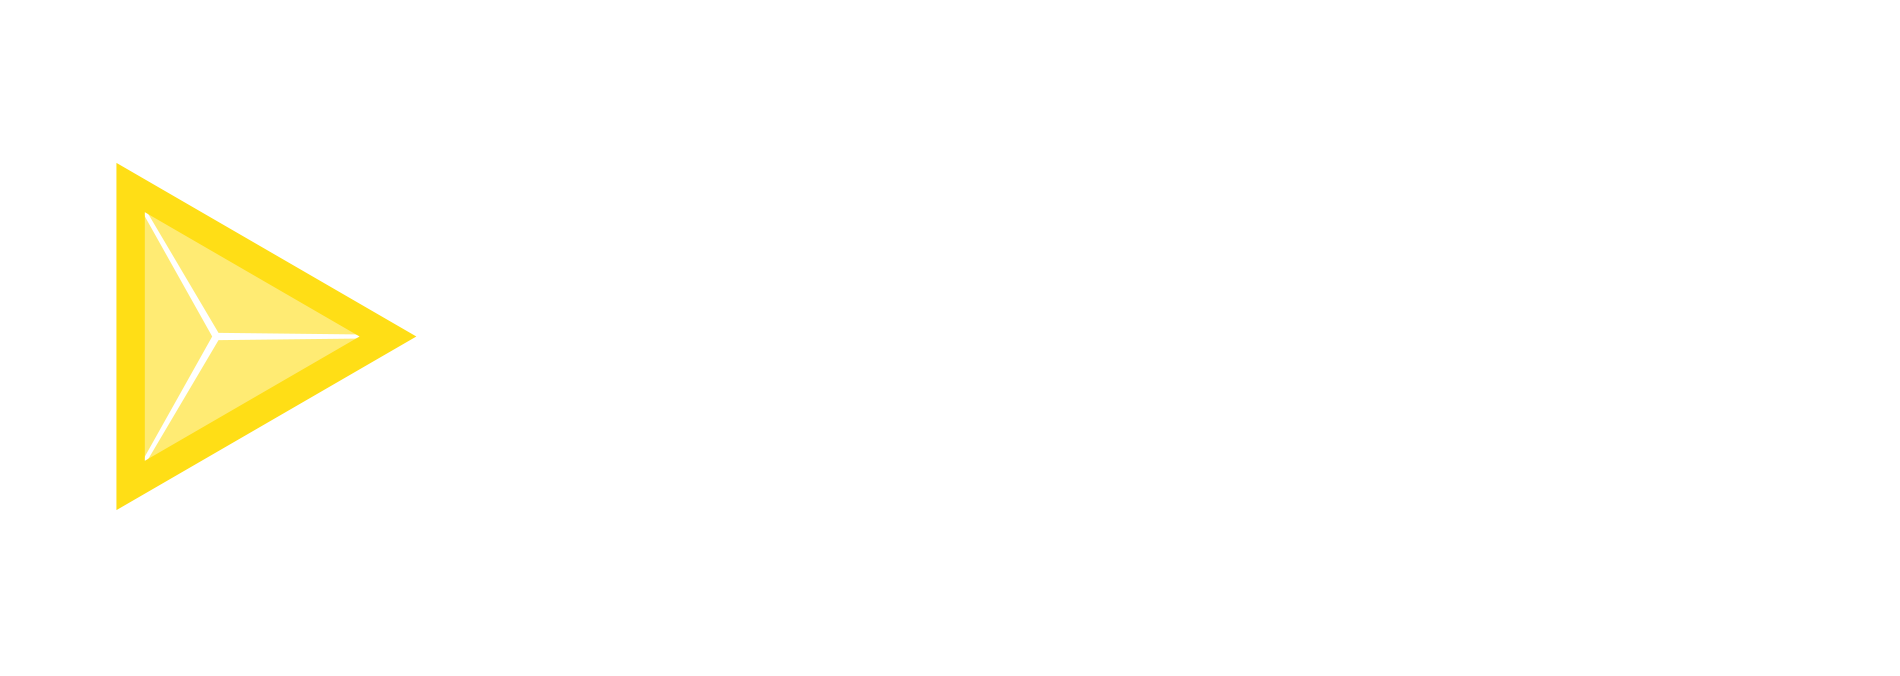 EcoInternet_Index Logo